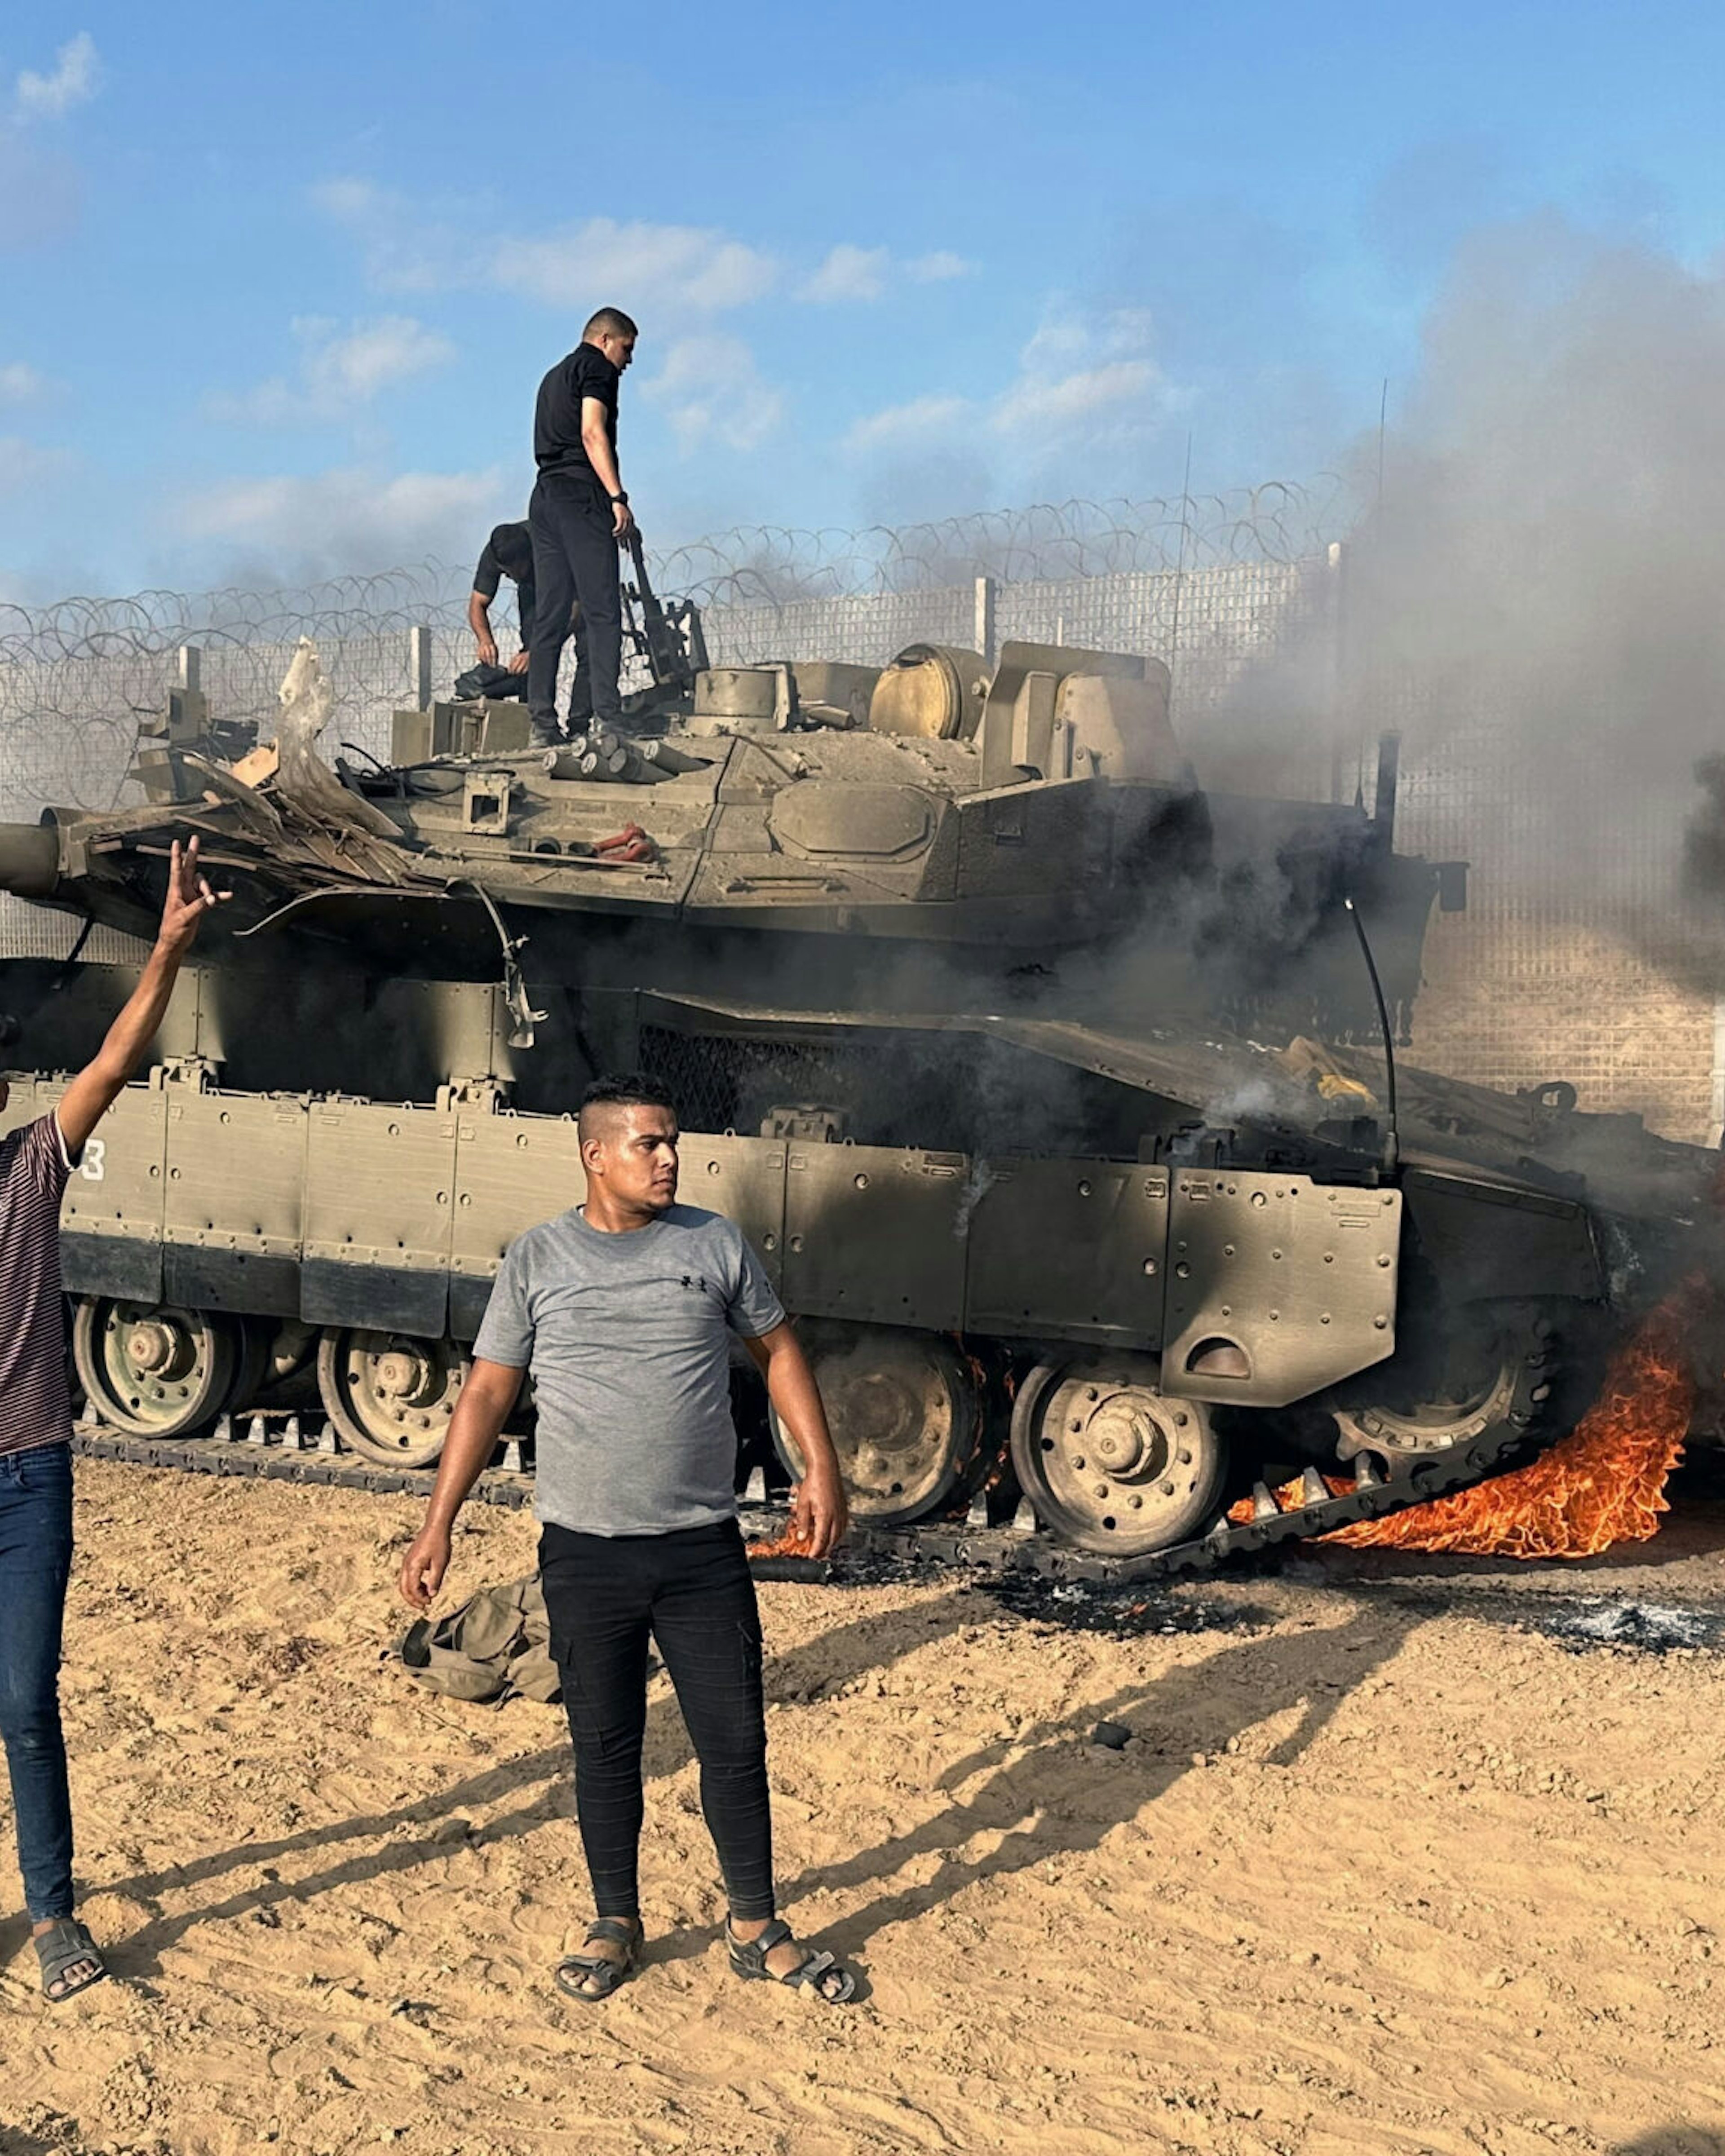 GAZA CITY, GAZA - OCTOBER 07: Smoke rises after Palestinian members of the Ezz Al-Din Al Qassam Brigades, the military wing of Hamas burn military armored vehicle belonging to Israeli forces near Gaza Strip, Gaza on October 07, 2023.